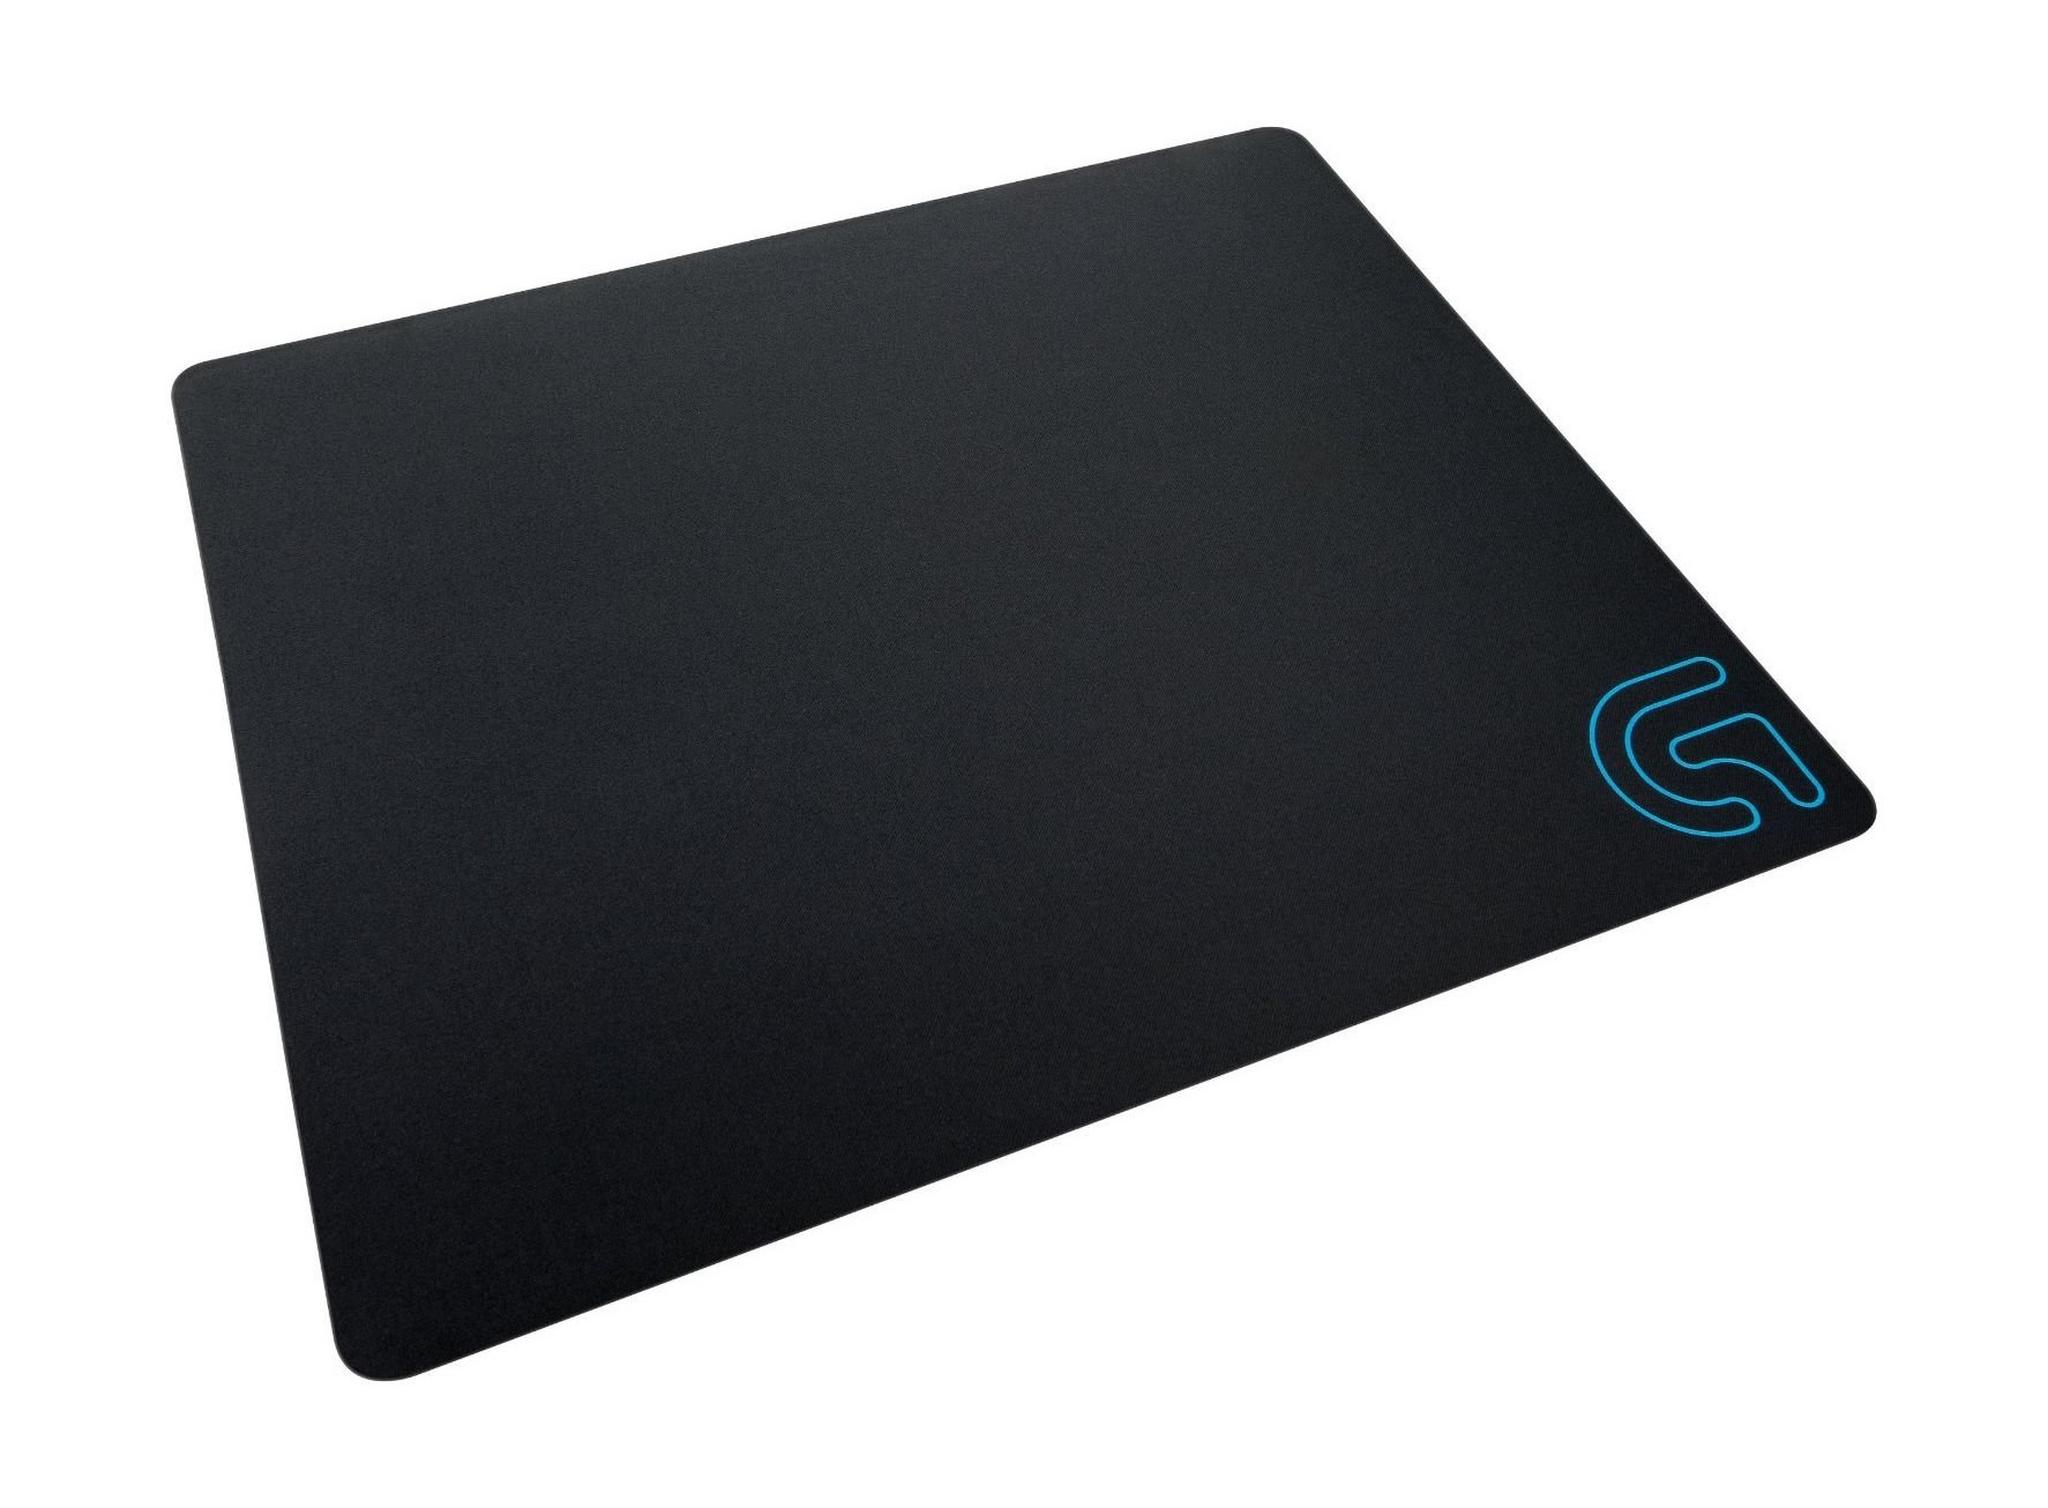 Logitech G240 Cloth Gaming Mouse Pad (943-000095) - Black